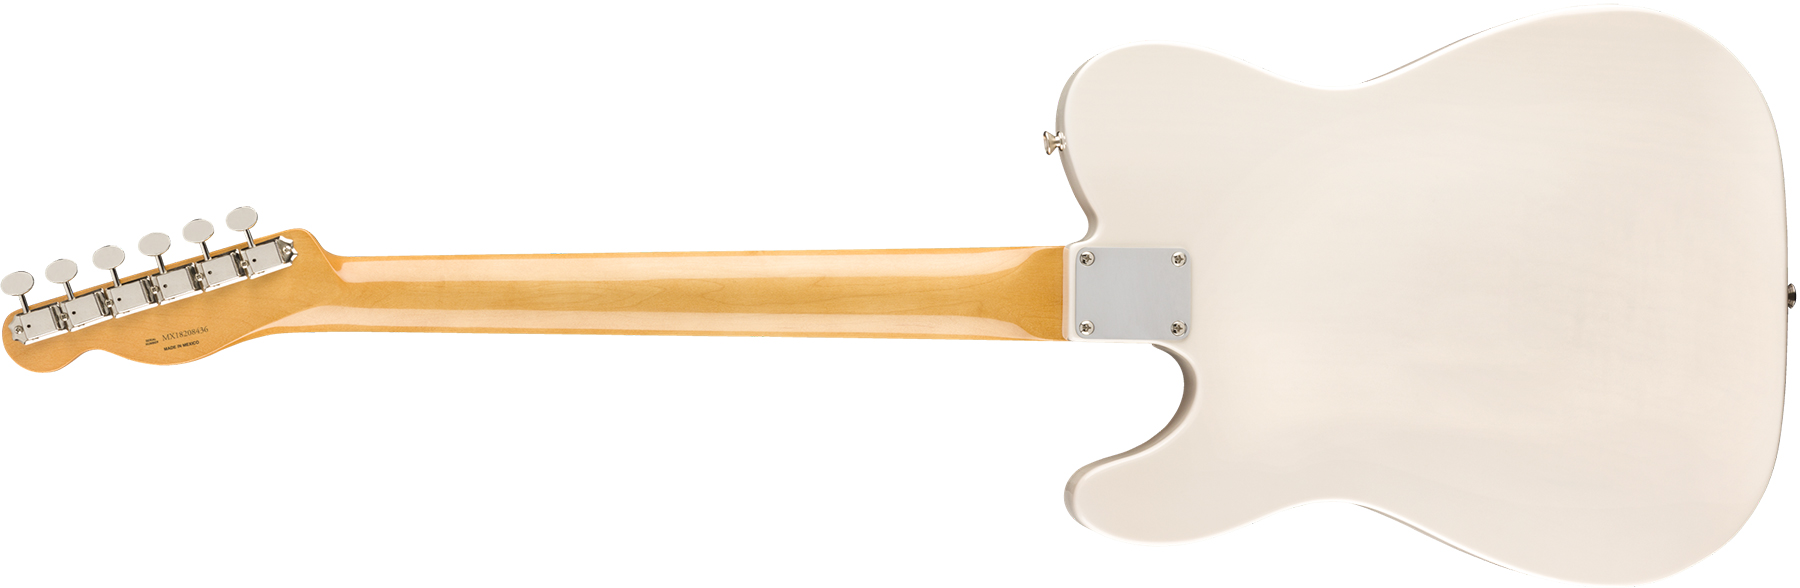 Fender Tele 60s Bigsby Vintera Vintage Mex Pf - White Blonde - Guitarra eléctrica con forma de tel - Variation 1